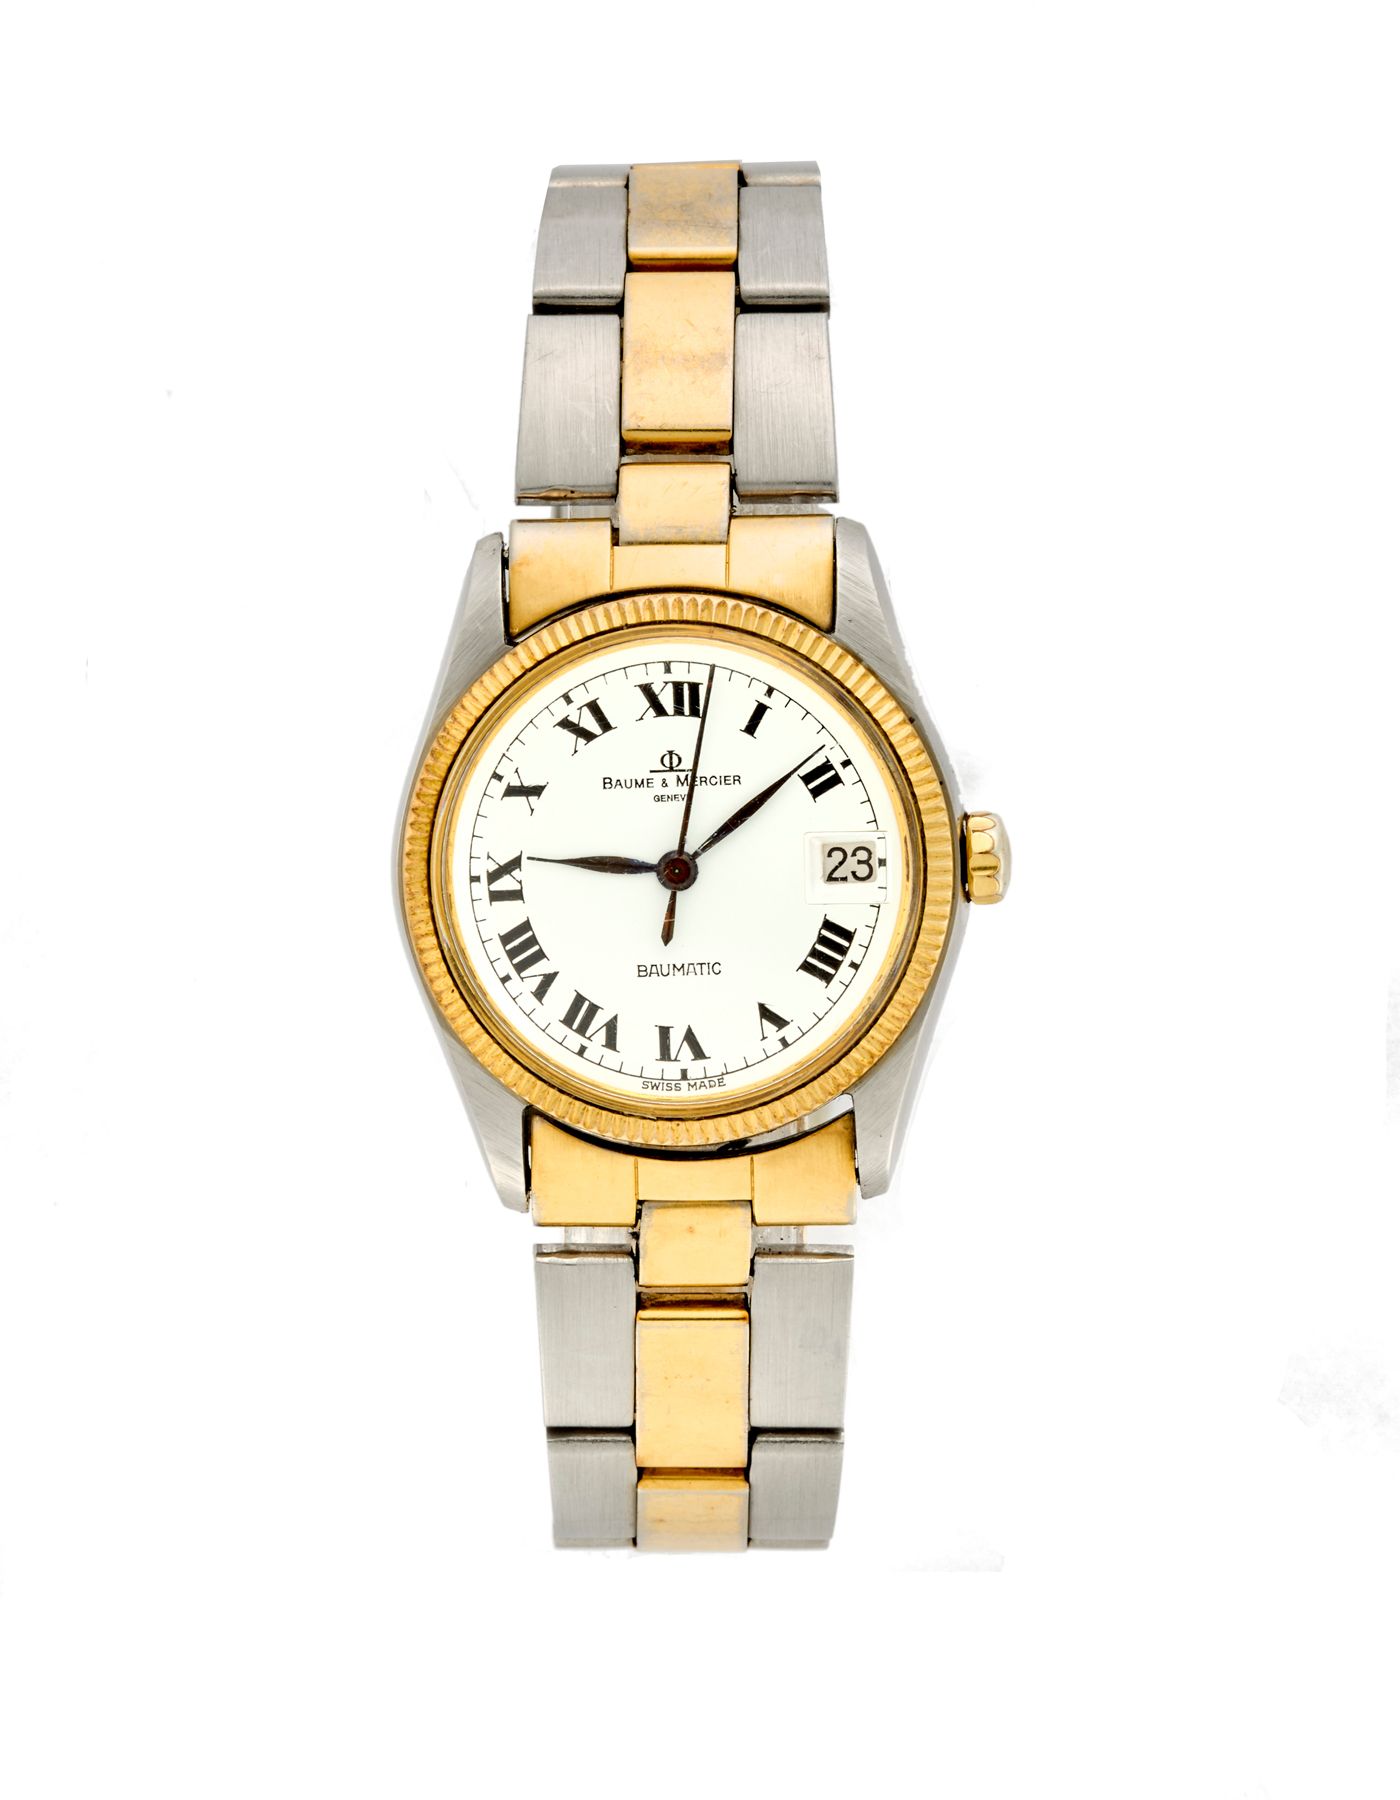 Null Baume & Mercier, Baumatic Ref. 1187.1
Lady's steel wristwatch
1980s
Dial, m&hellip;